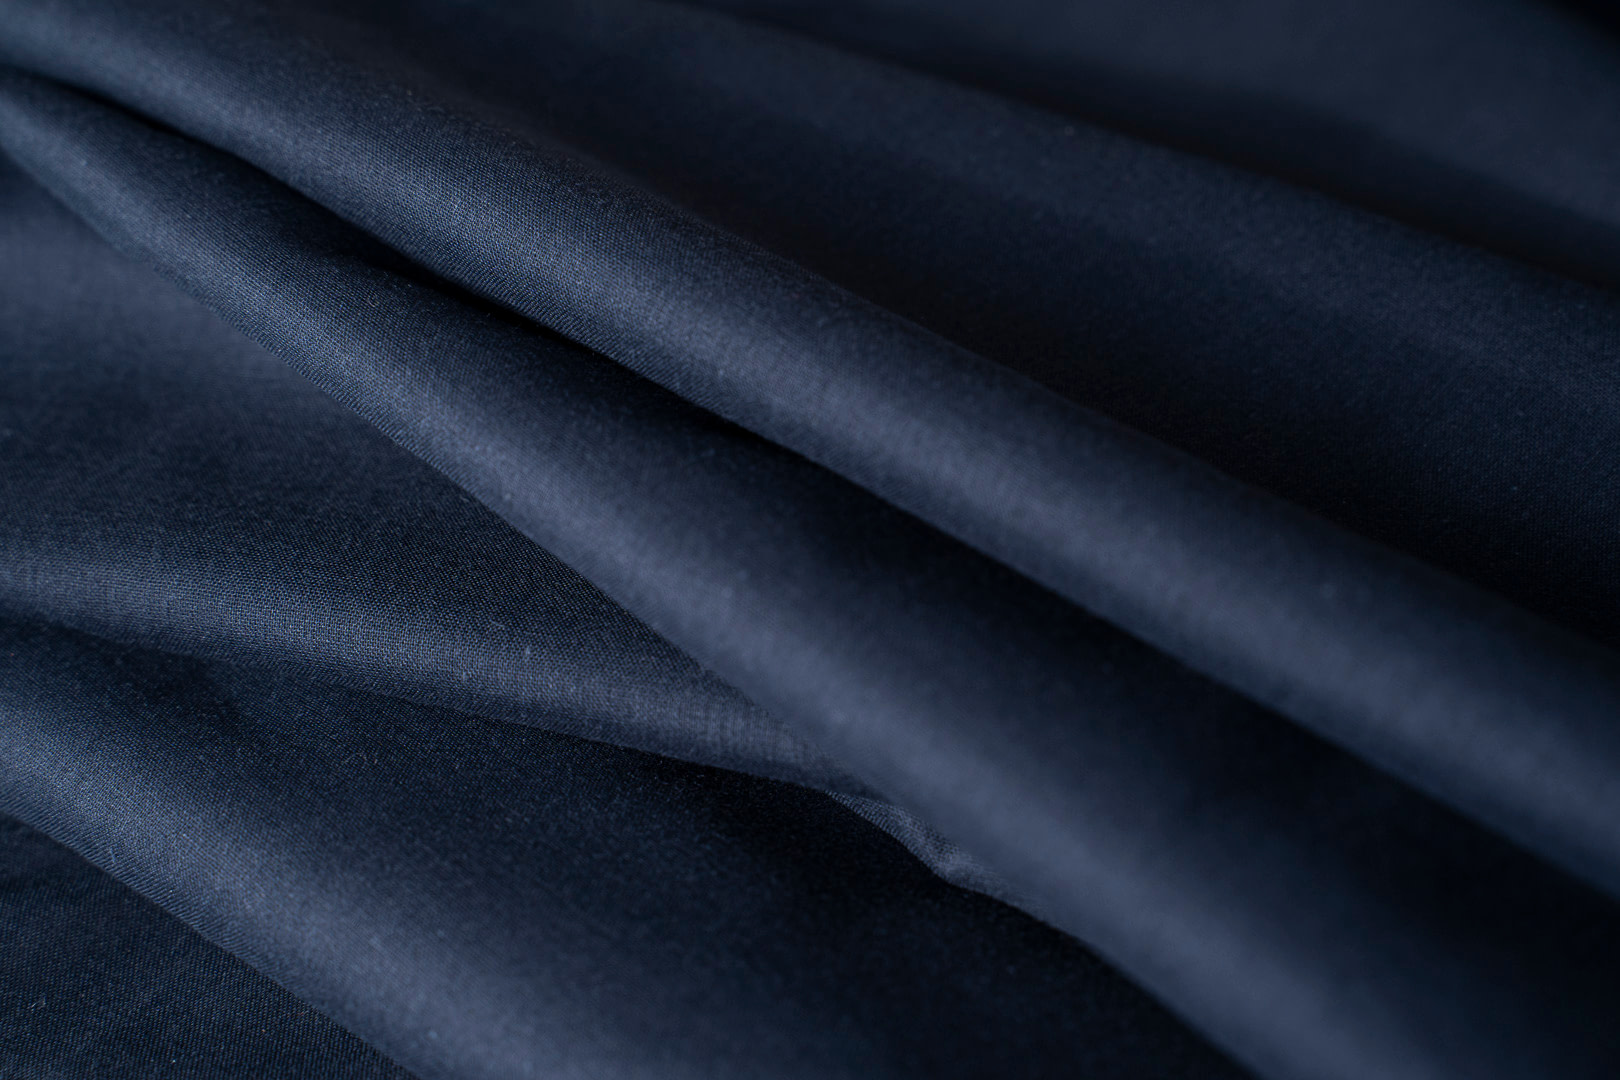 Blue Cotton Muslin Apparel Fabric TC000832